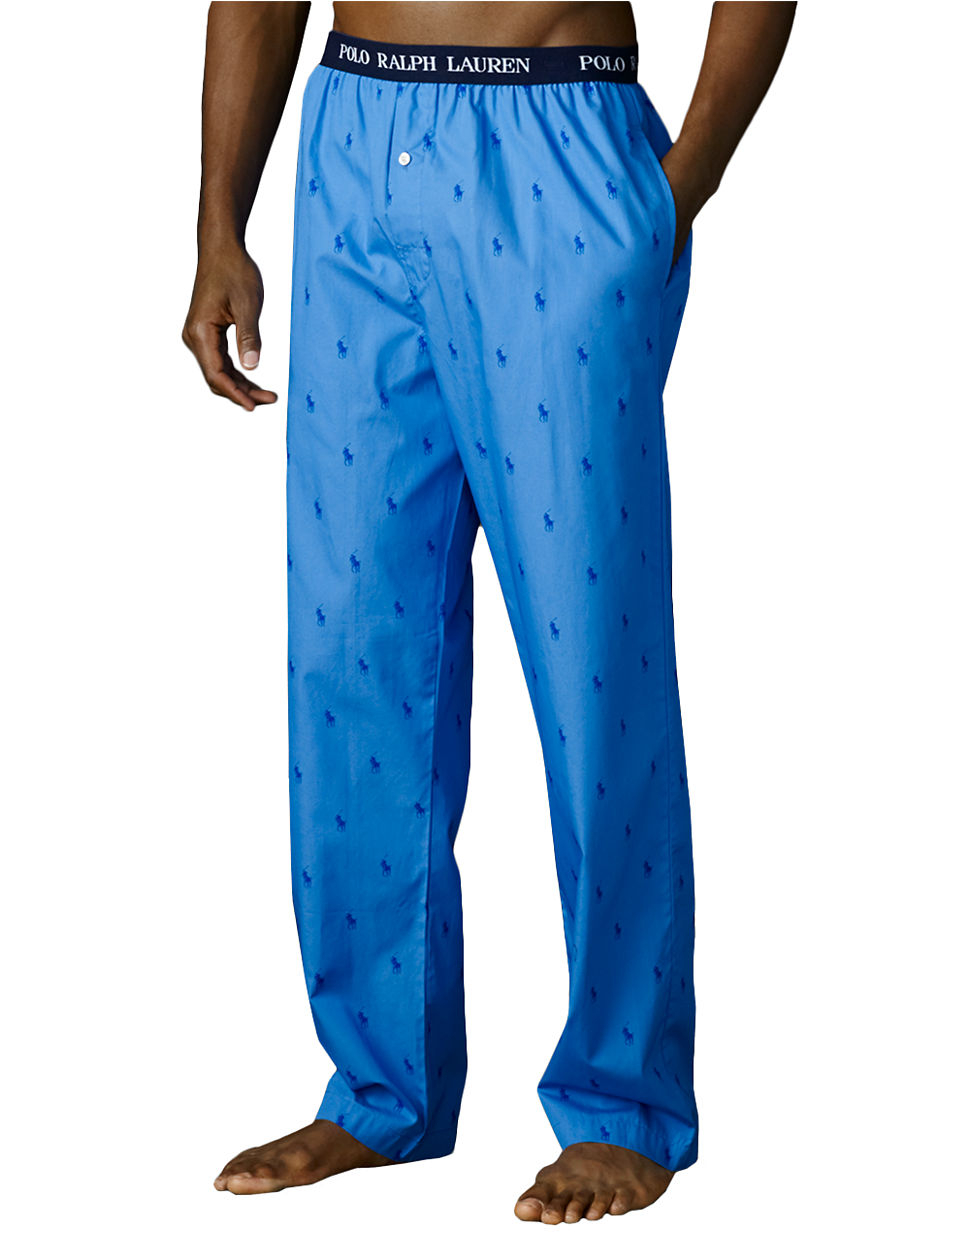 Polo Ralph Lauren Pony-Print Cotton Pajama Pants in Blue for Men - Lyst